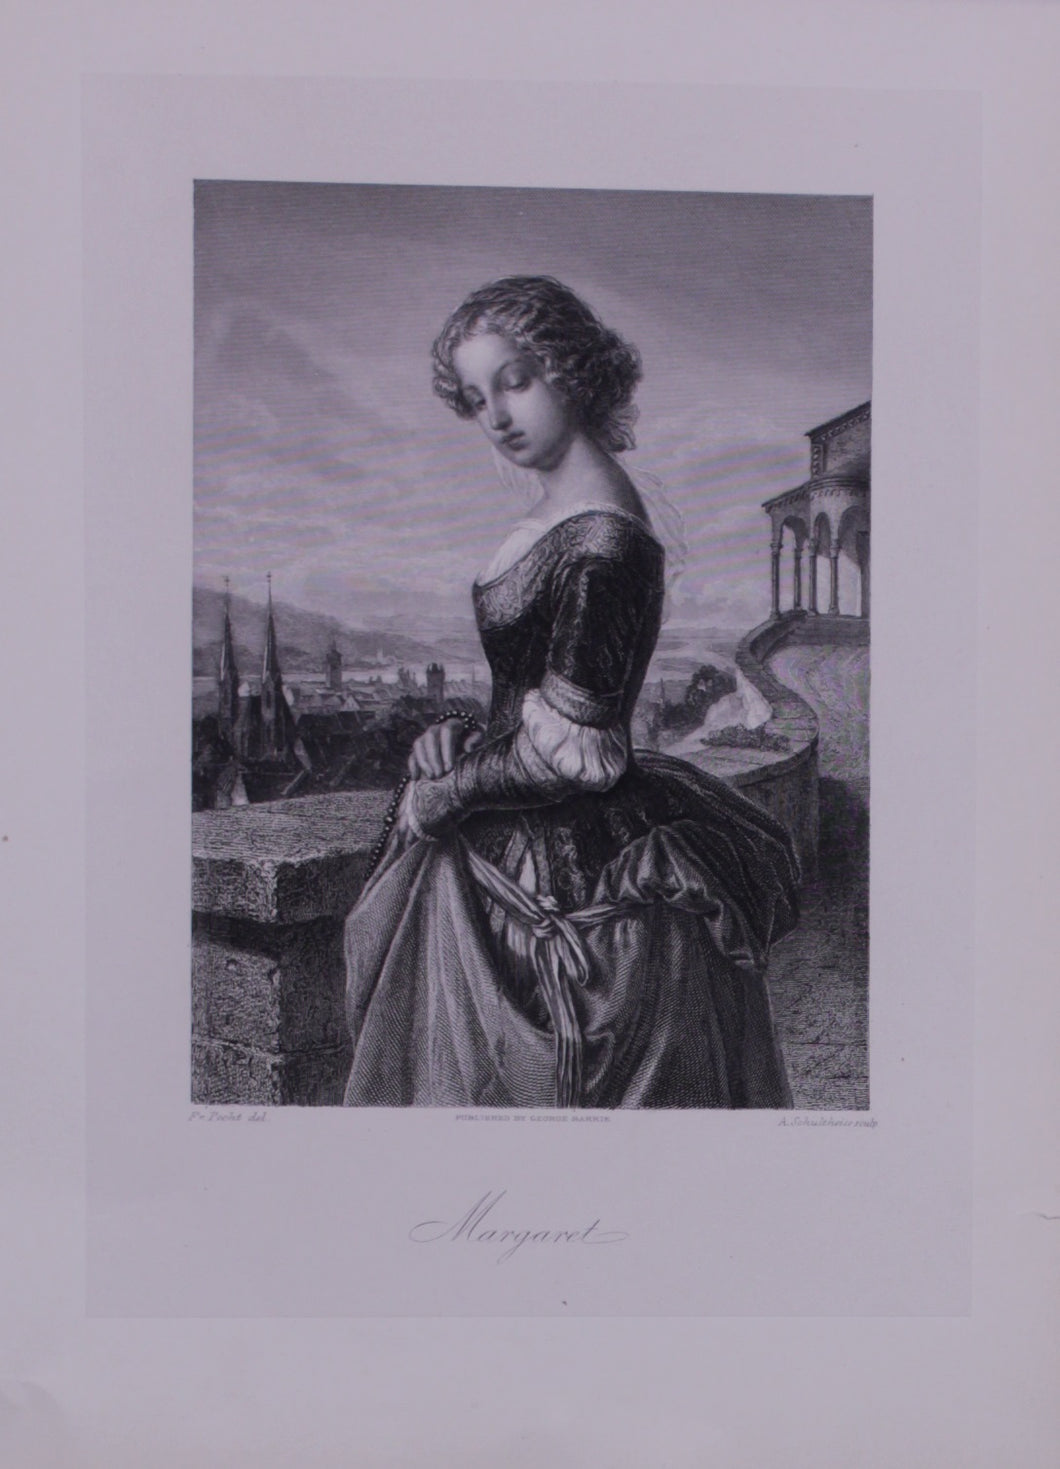 Portraits, Pecht, F, Margaret, c1890